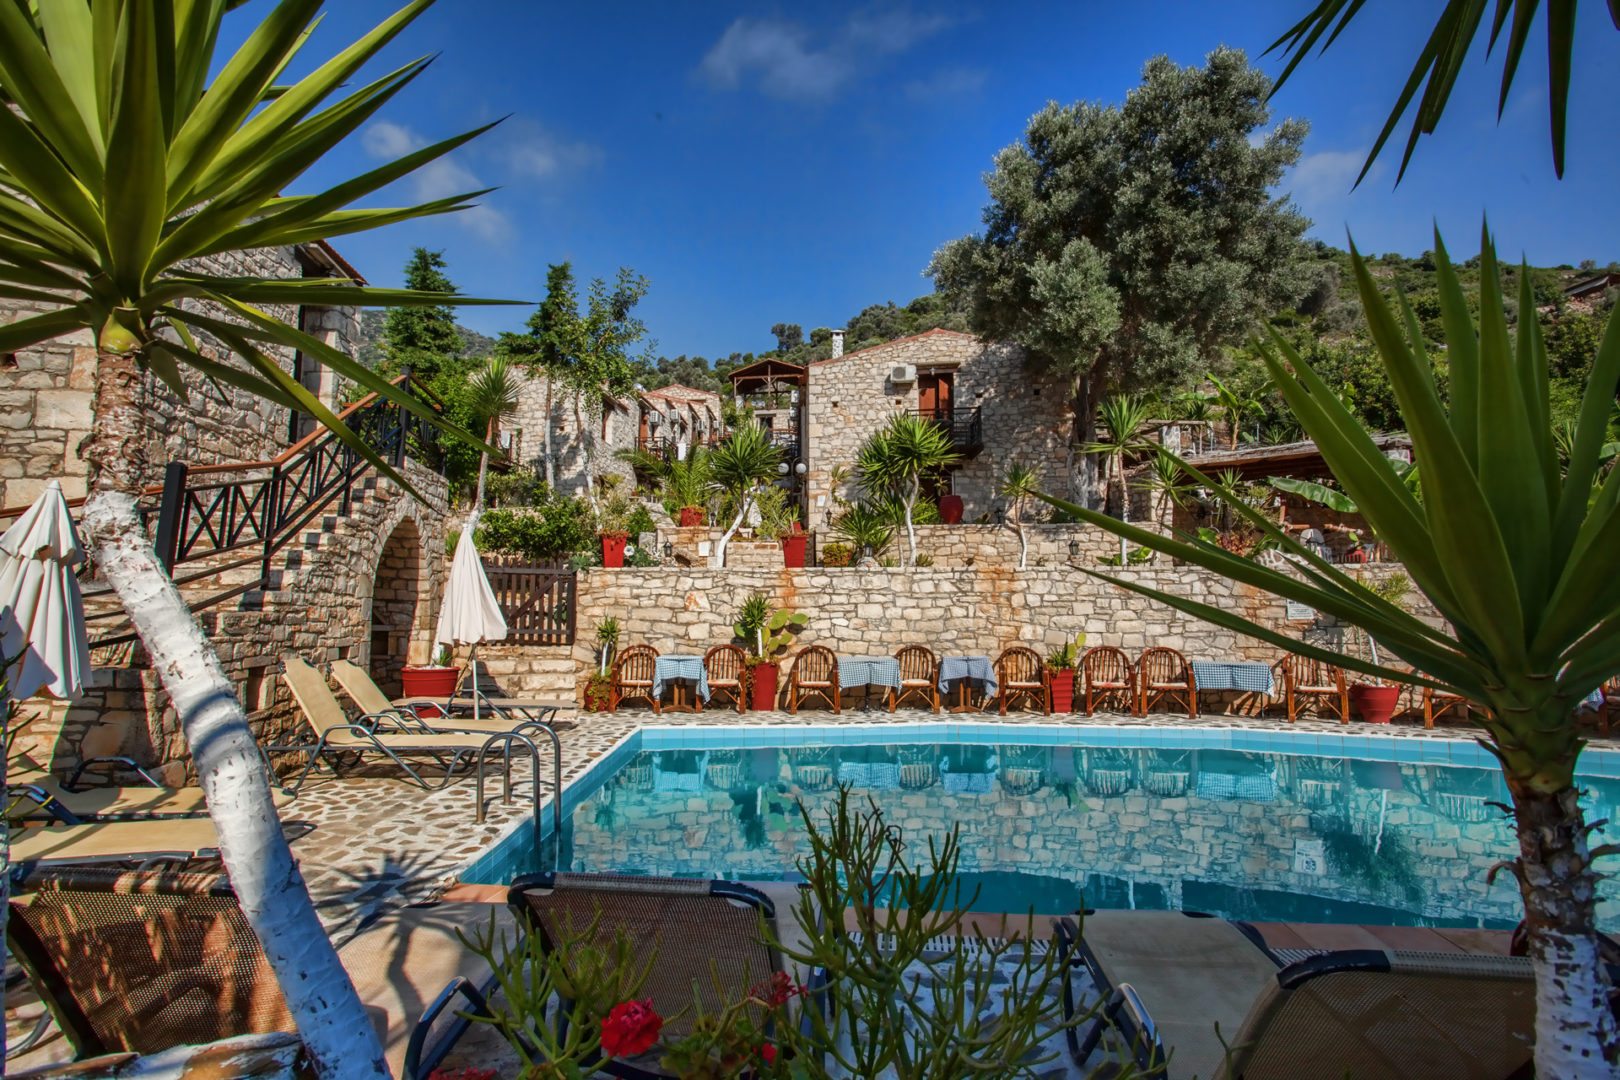 Hotel in Bali Crete - Stone Village - Large Pool 2